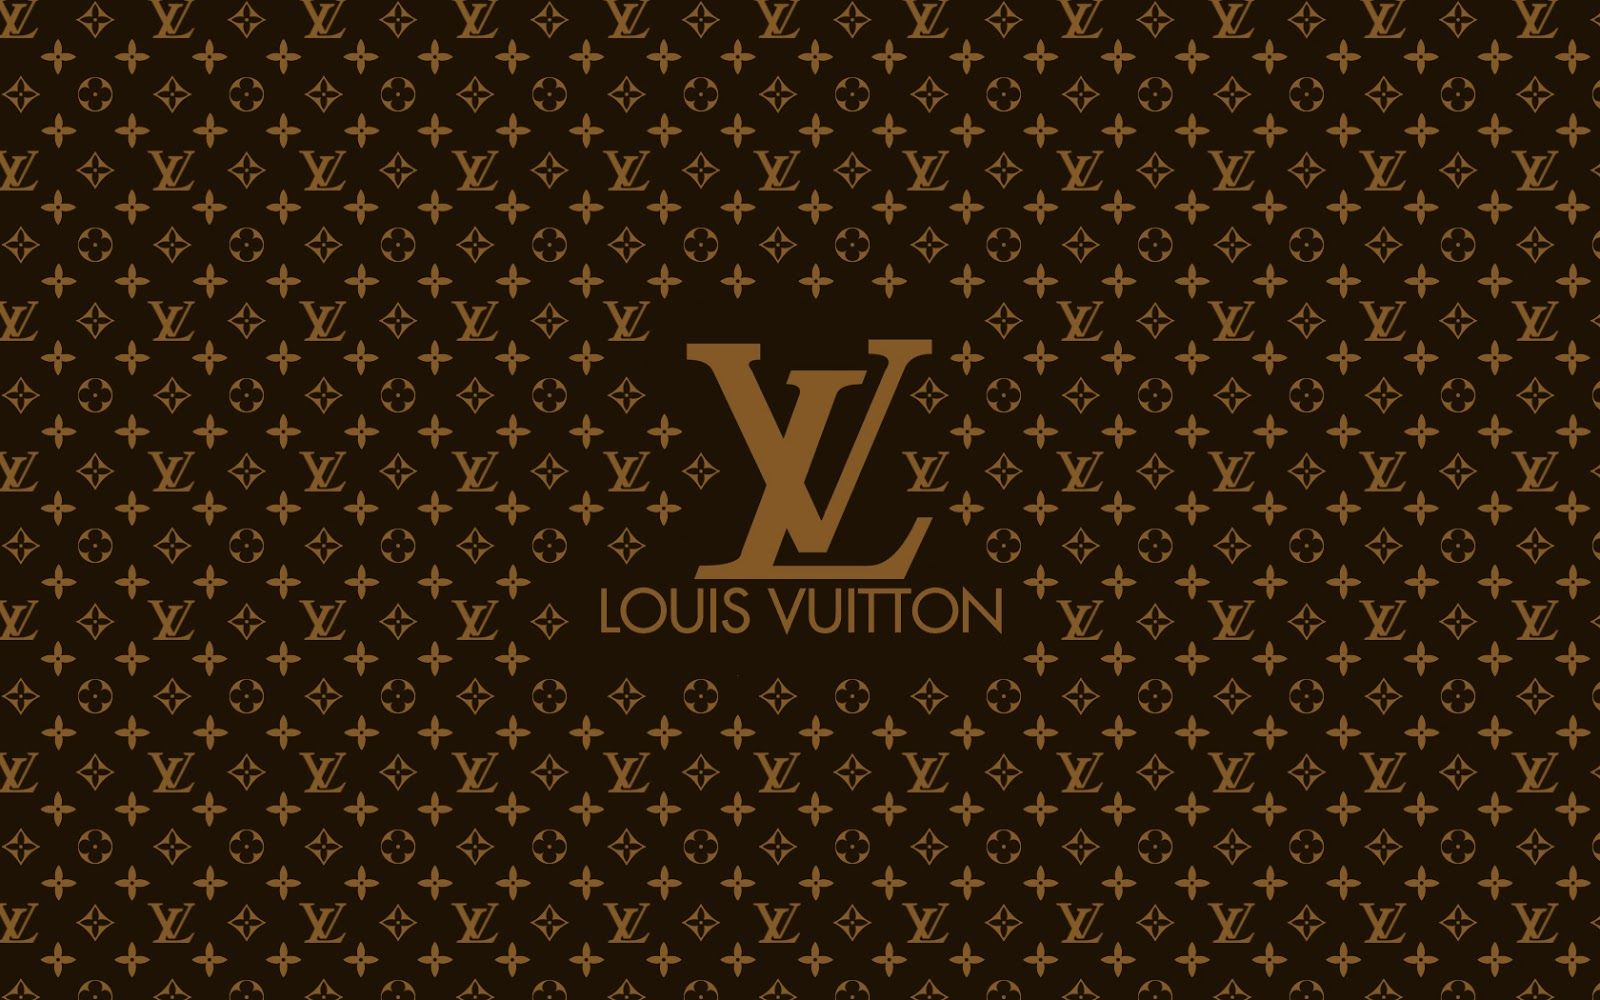 Louis Vuitton Wallpaper Background. The Art of Mike Mignola